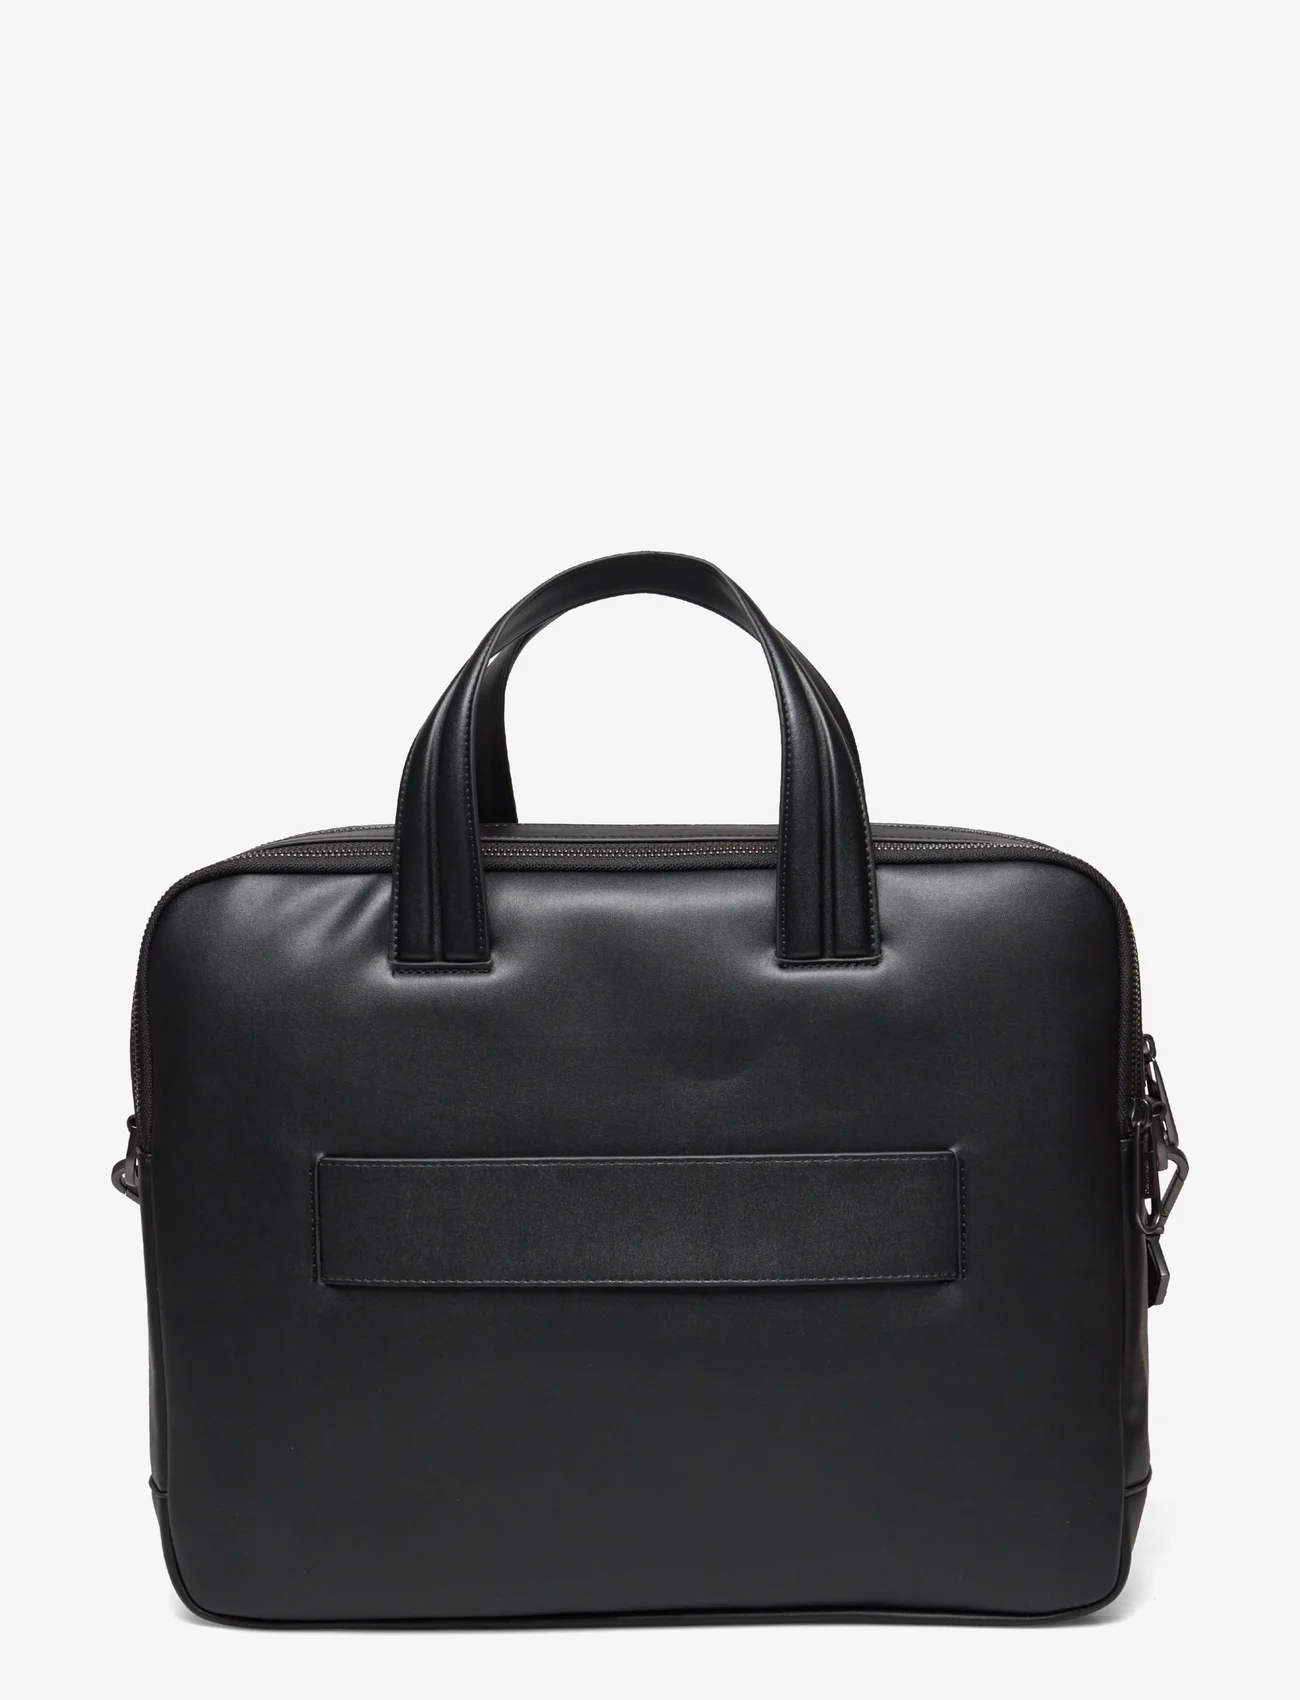 Calvin Klein - CK SET 2G LAPTOP BAG - sülearvutikotid - ck black - 1